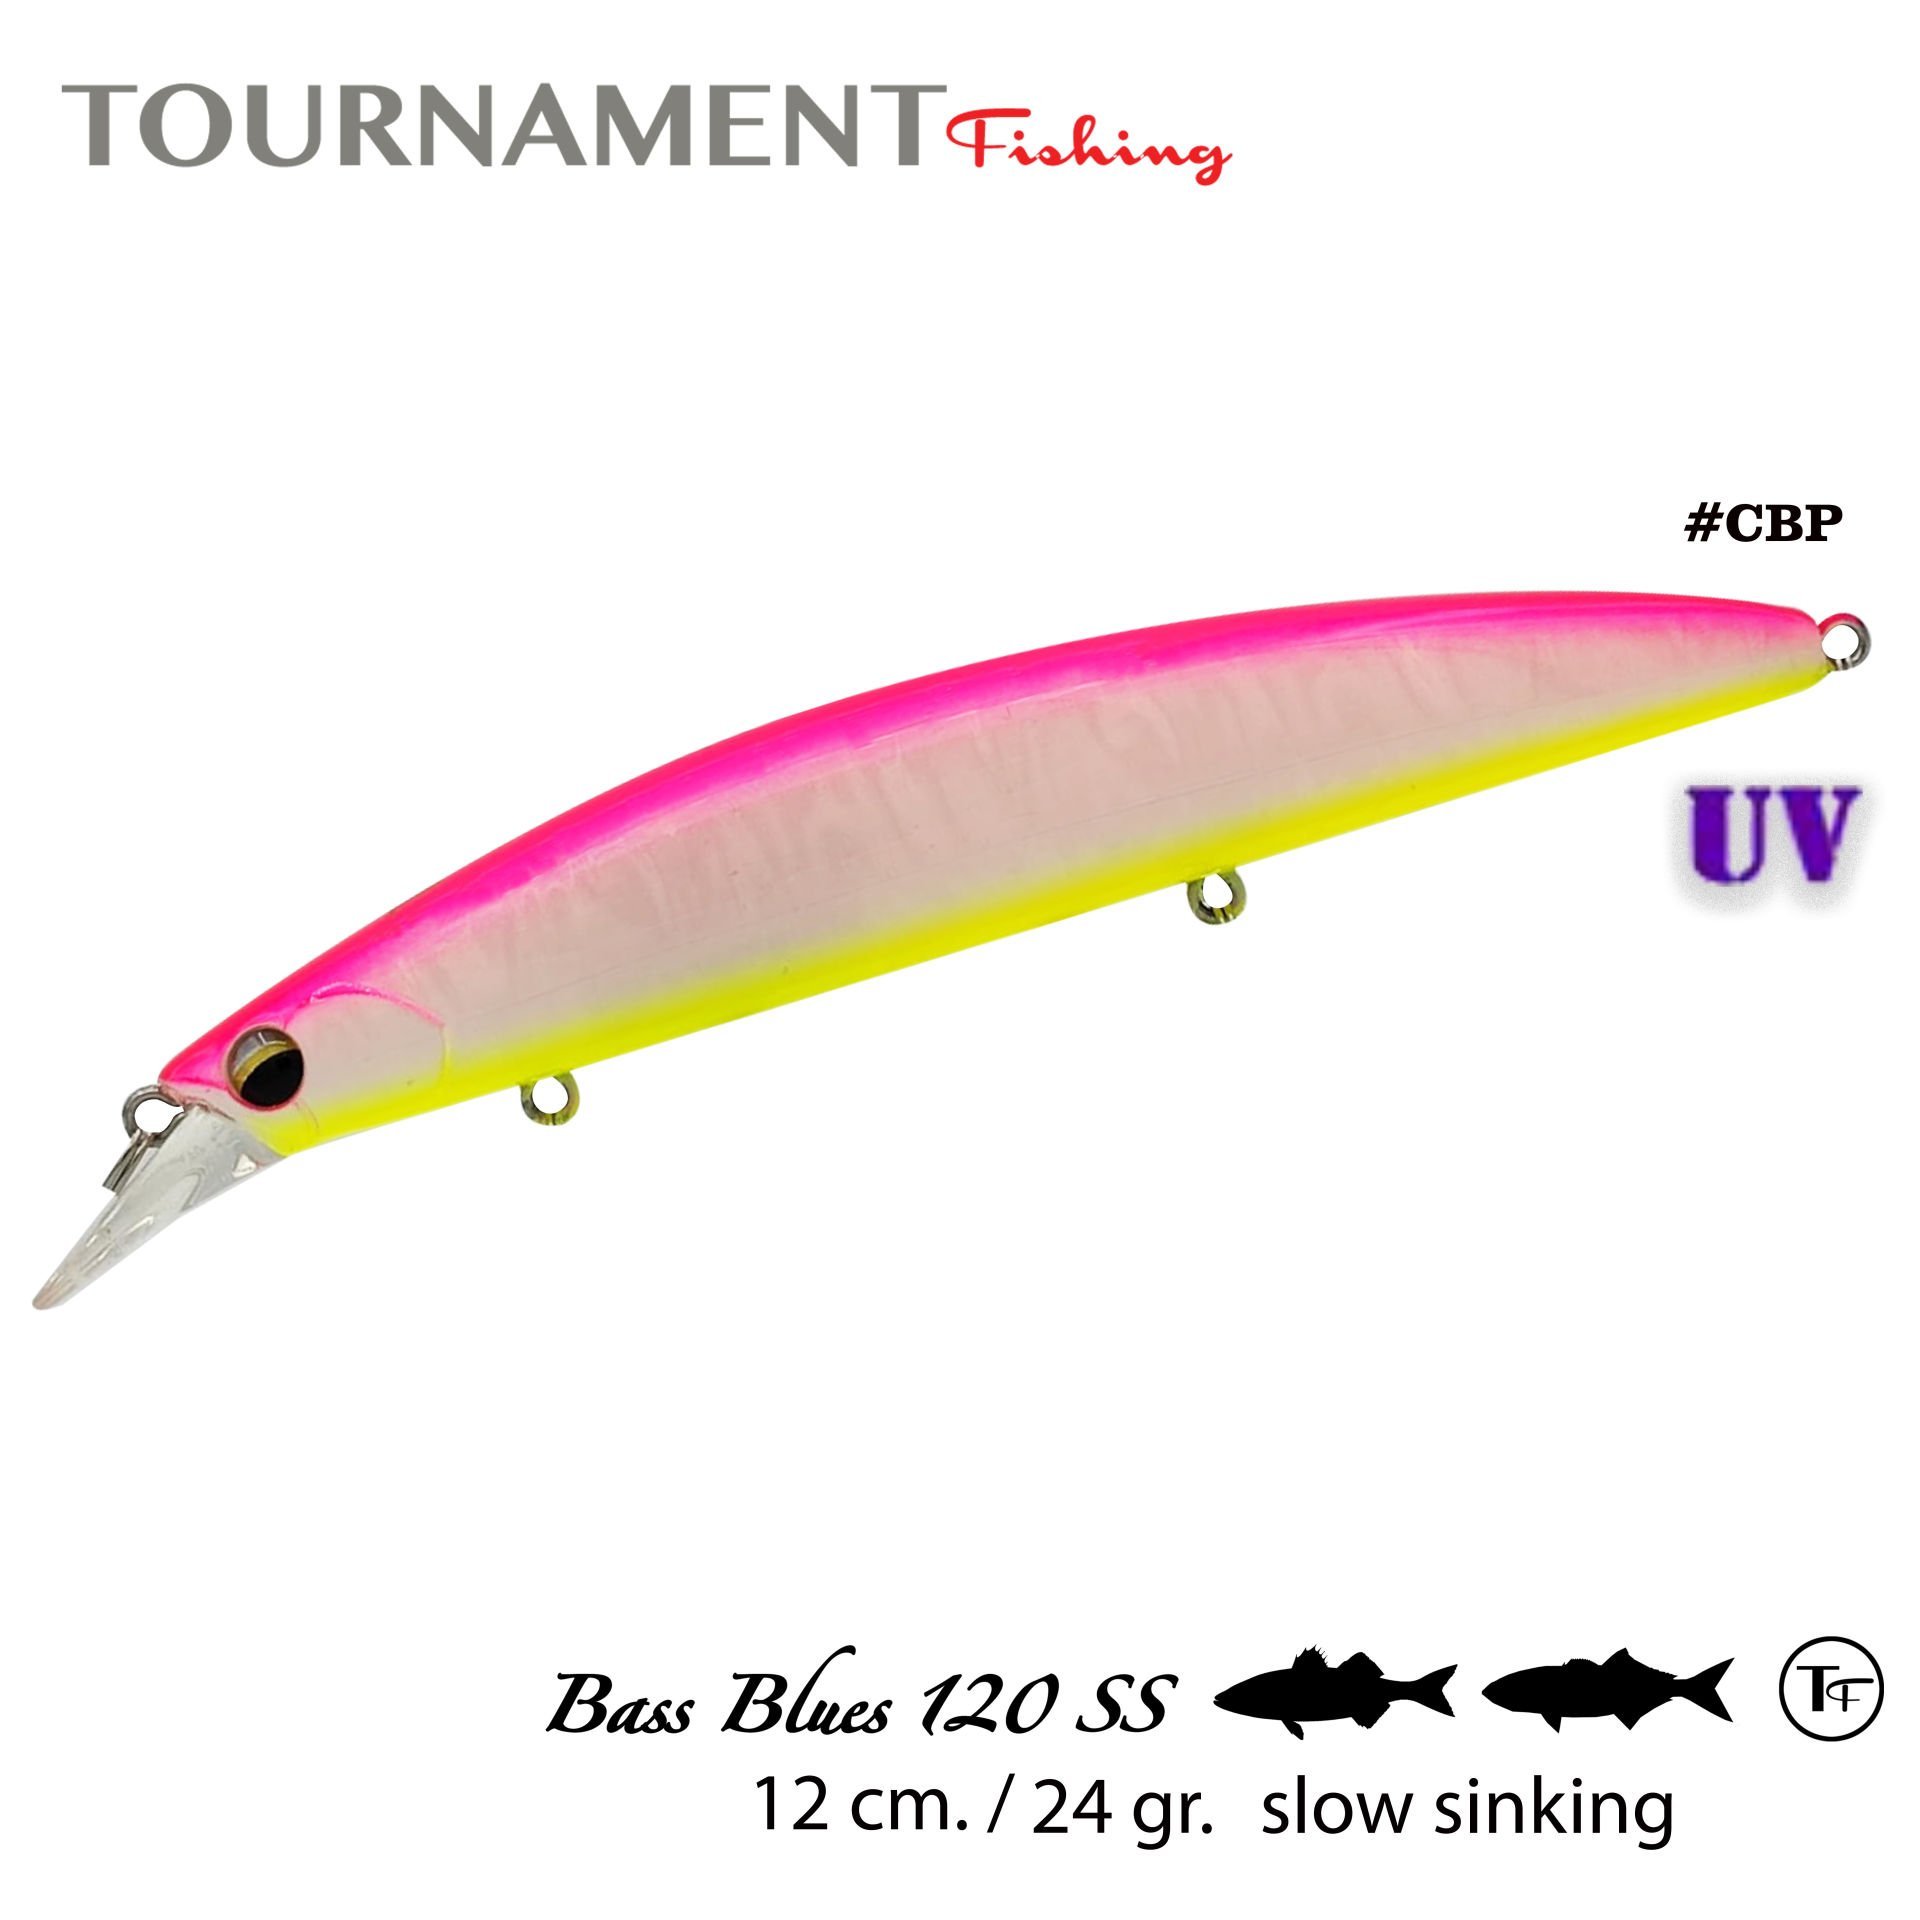 Tournament fishing Bassblues 120 SS 120 mm 24 gr #CBP